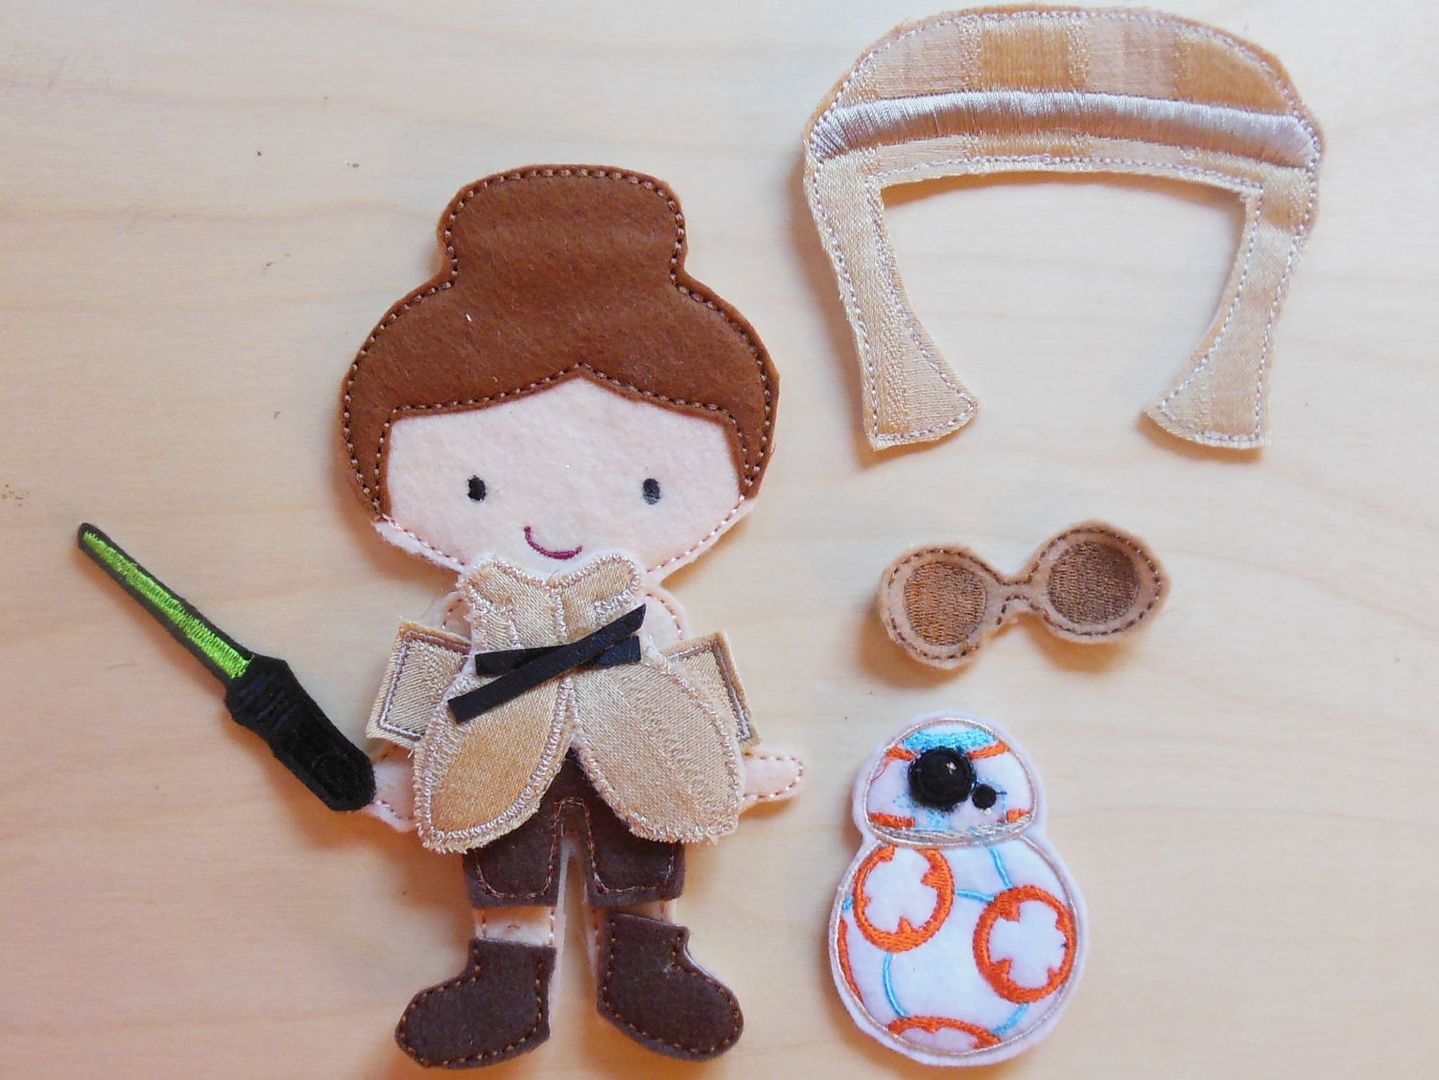 Star Wars Rey felt dress-up doll on Etsy